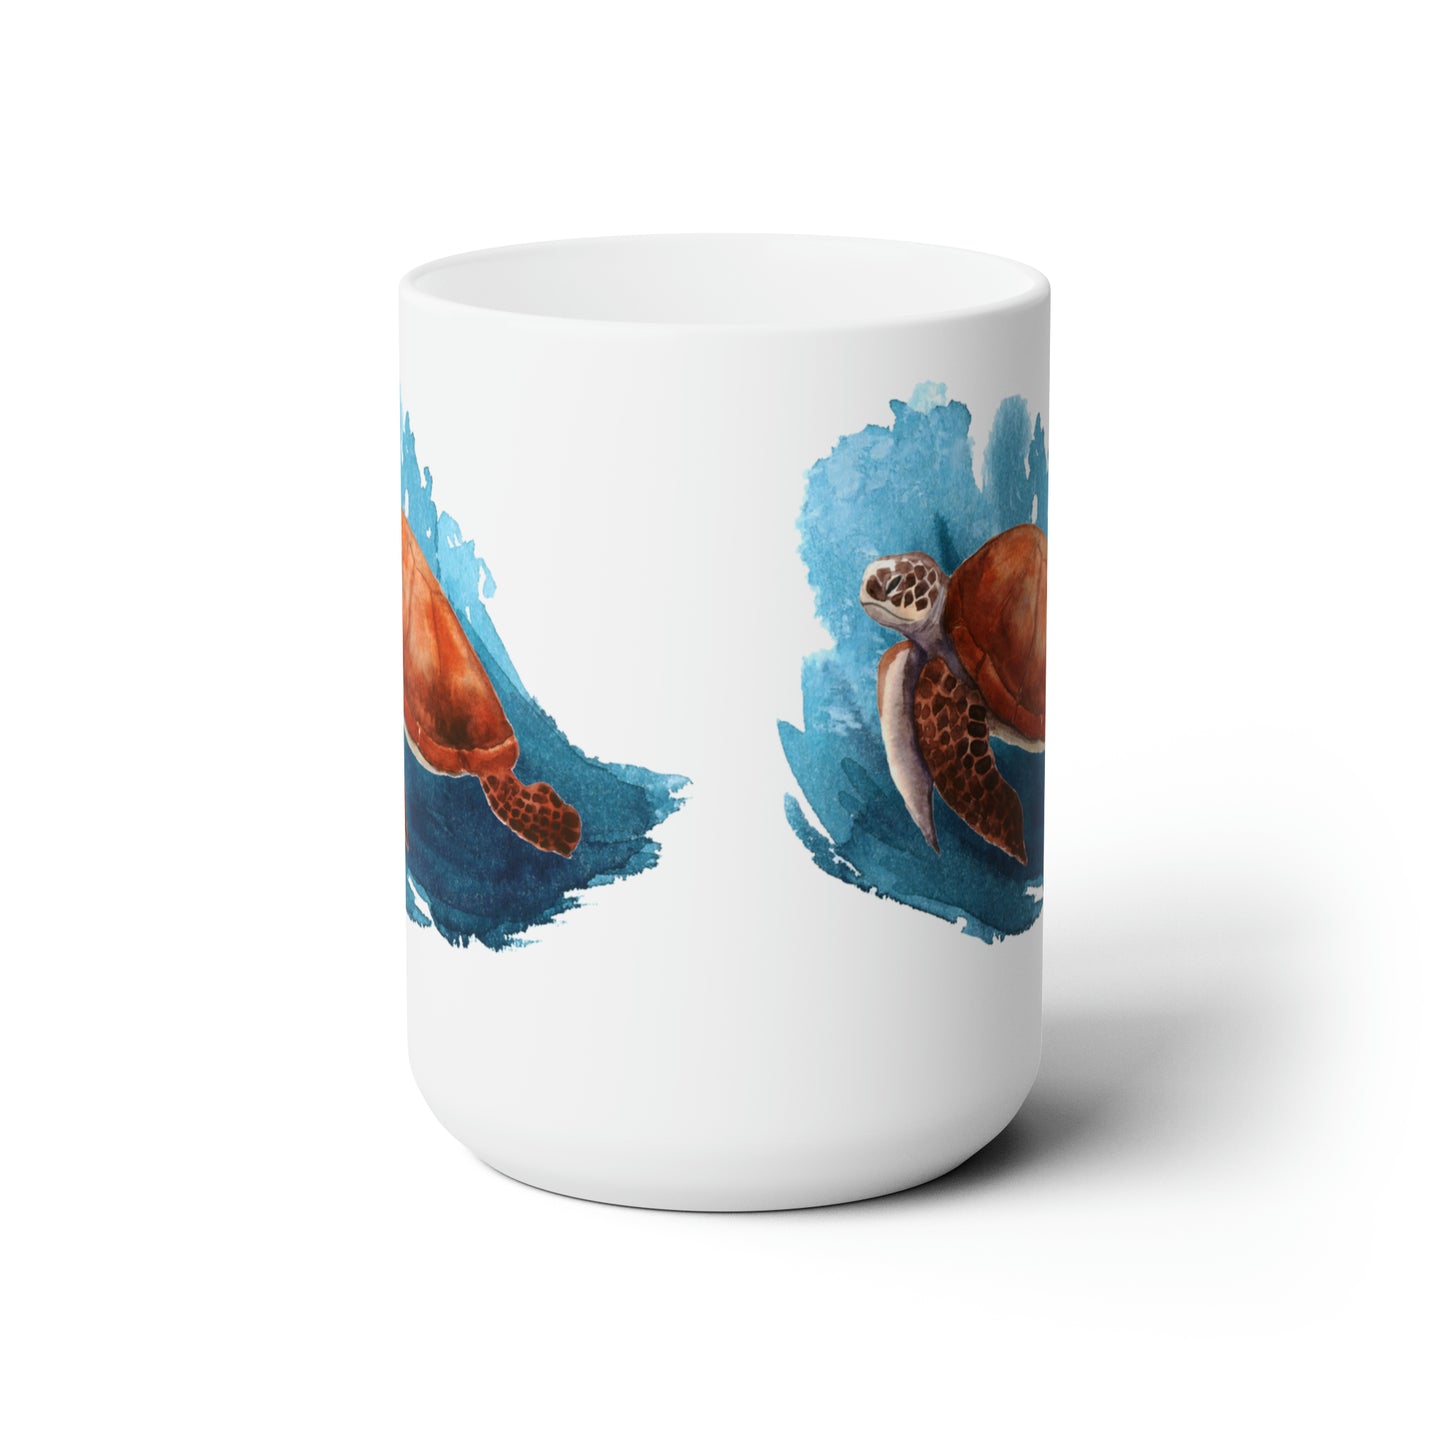 Sea turtle - Ceramic Mug 15oz - MenHal store